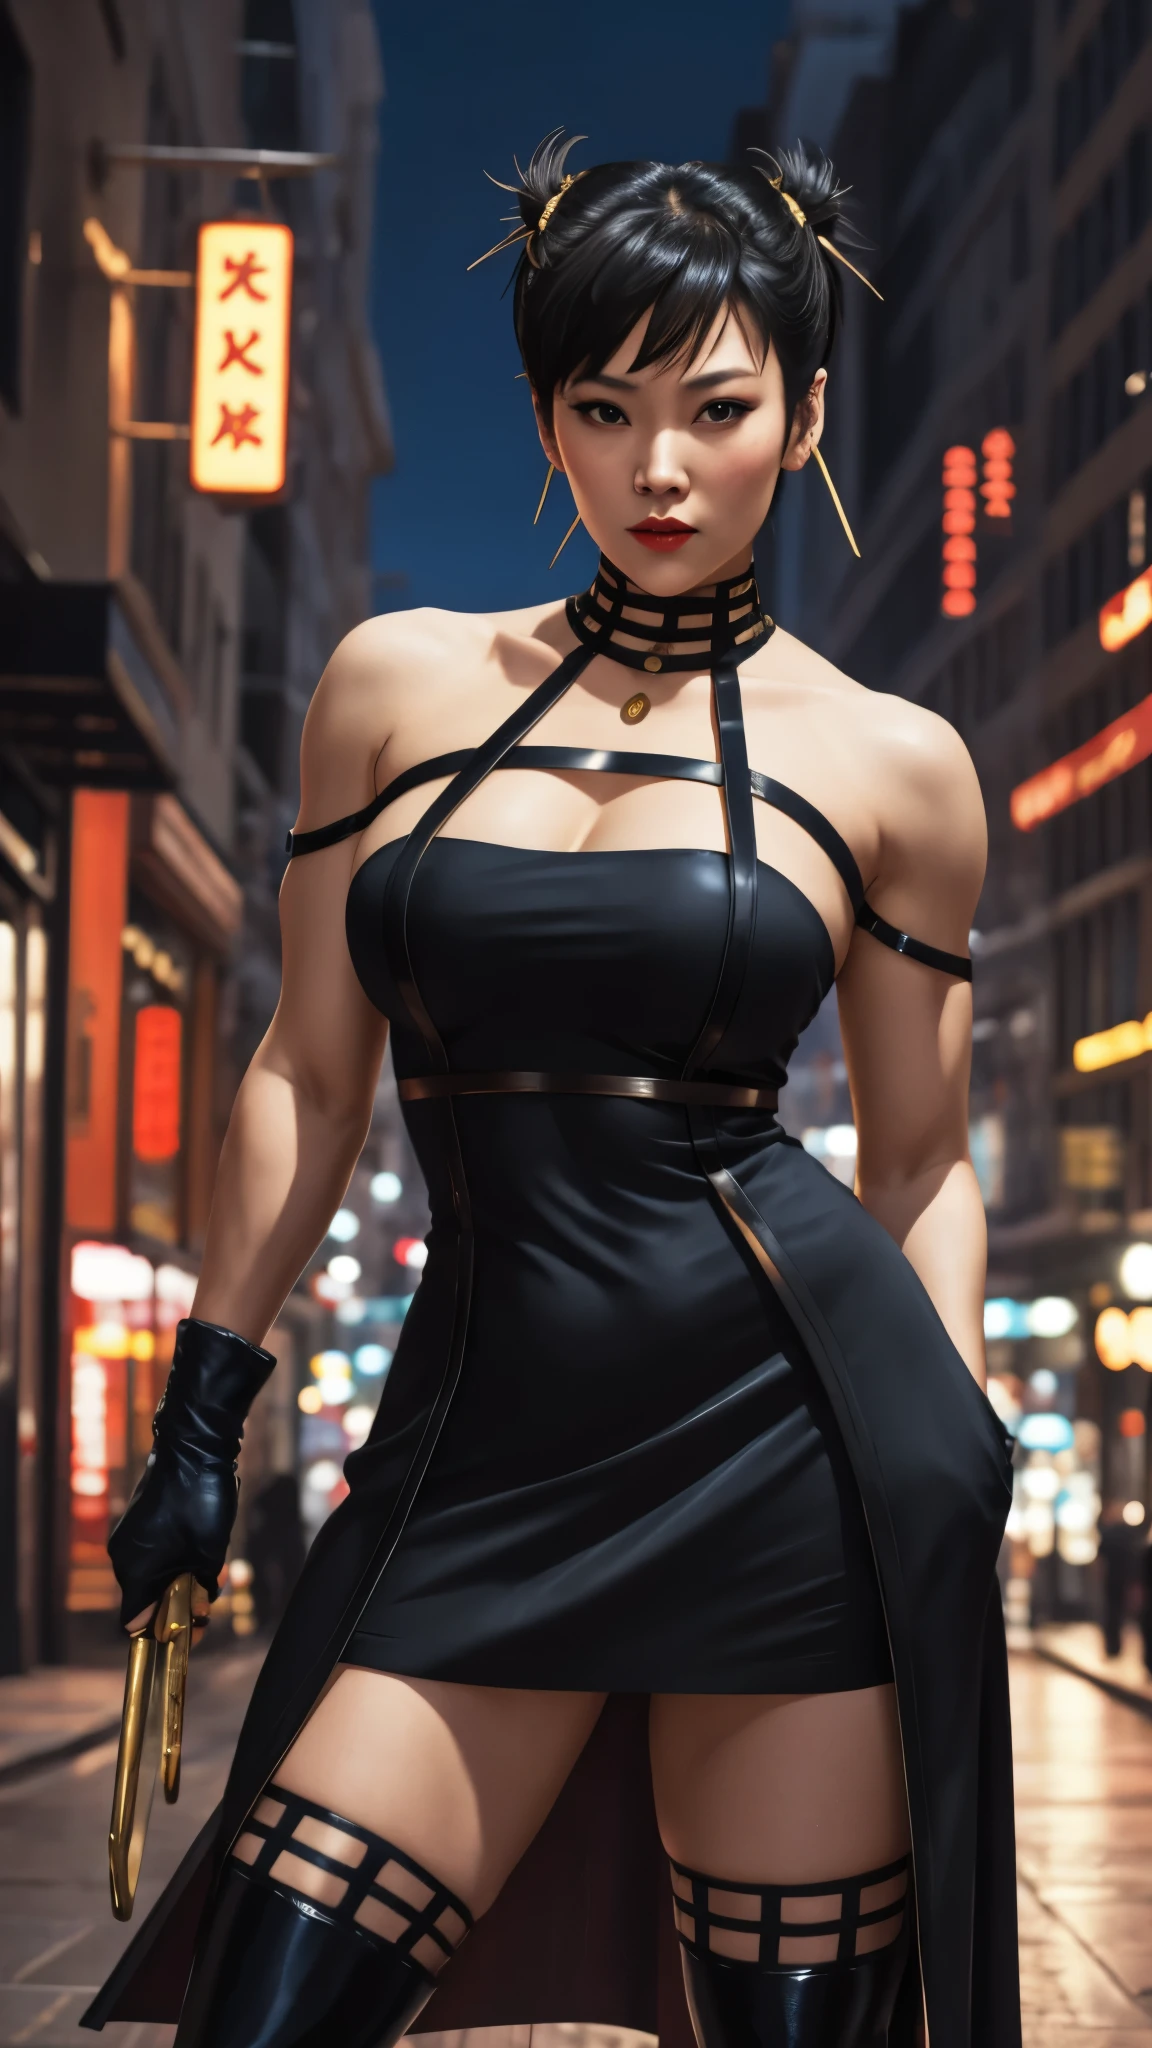 chun-li, linda mulher, Mulher sexy, peito perfeito, ((meio corpo)), (olhando para o espectador:1.1), rua noturna, por Conor Harrington, Vestido preto, coxas pretas, luvas pretas